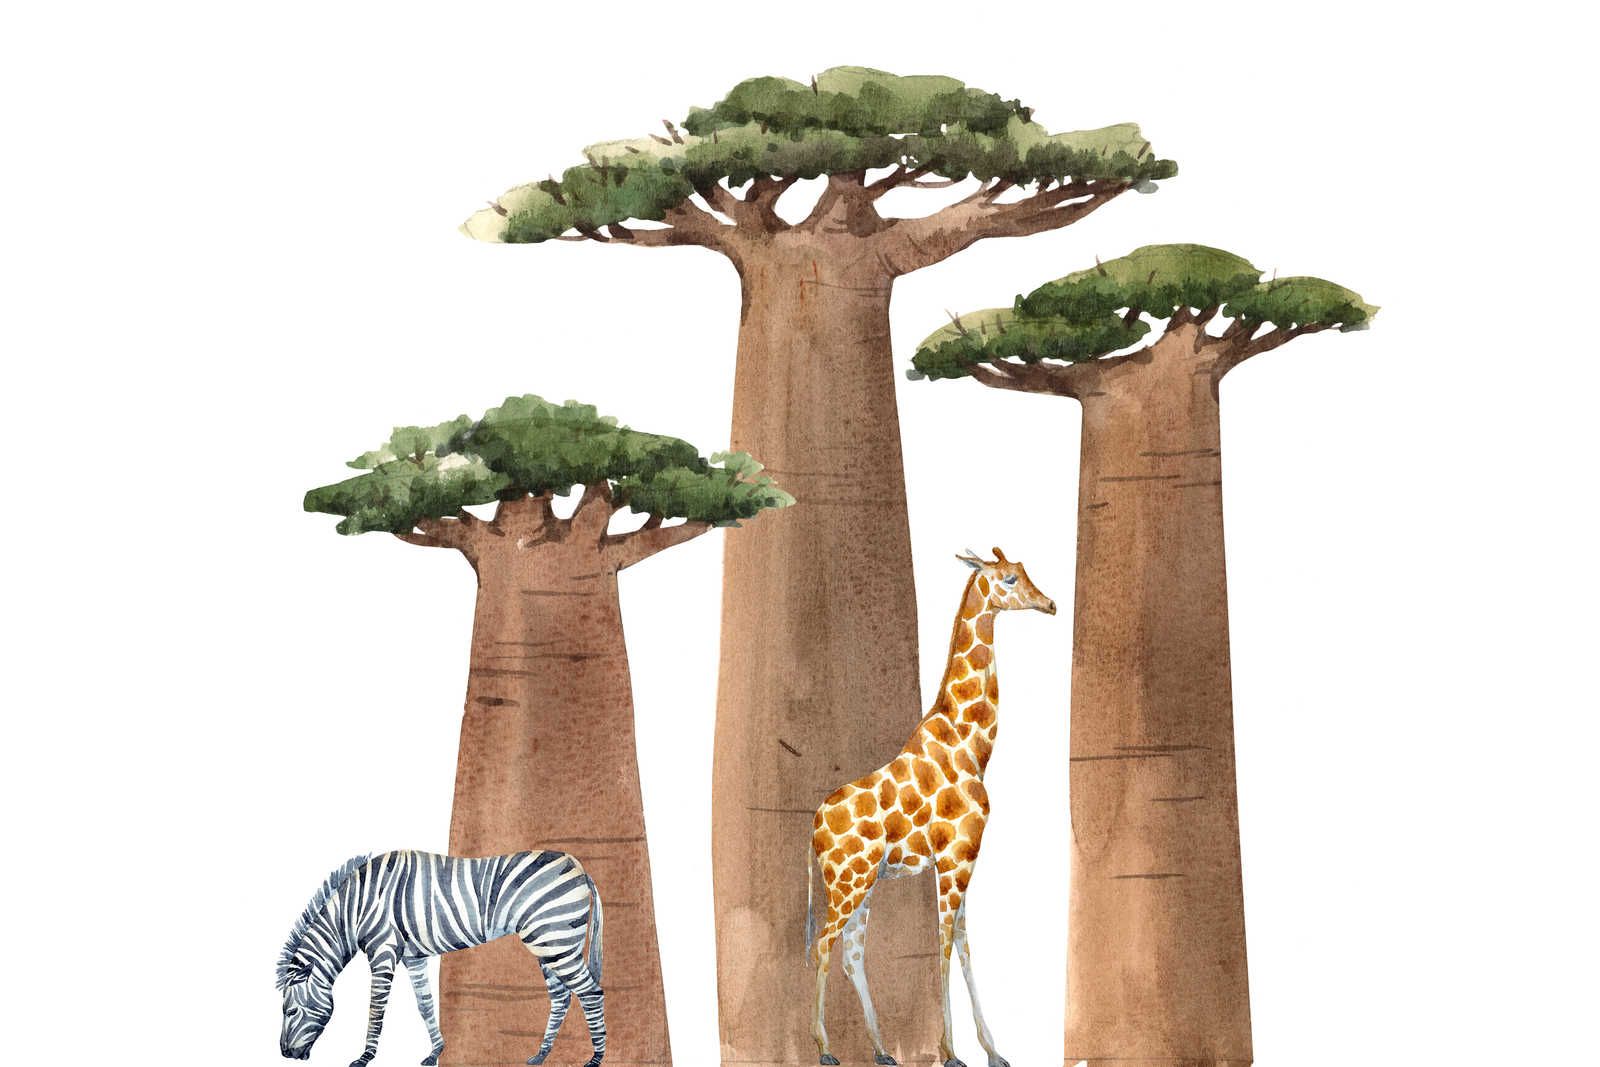             Canvas Savannah met Giraffe en Zebra - 120 cm x 80 cm
        